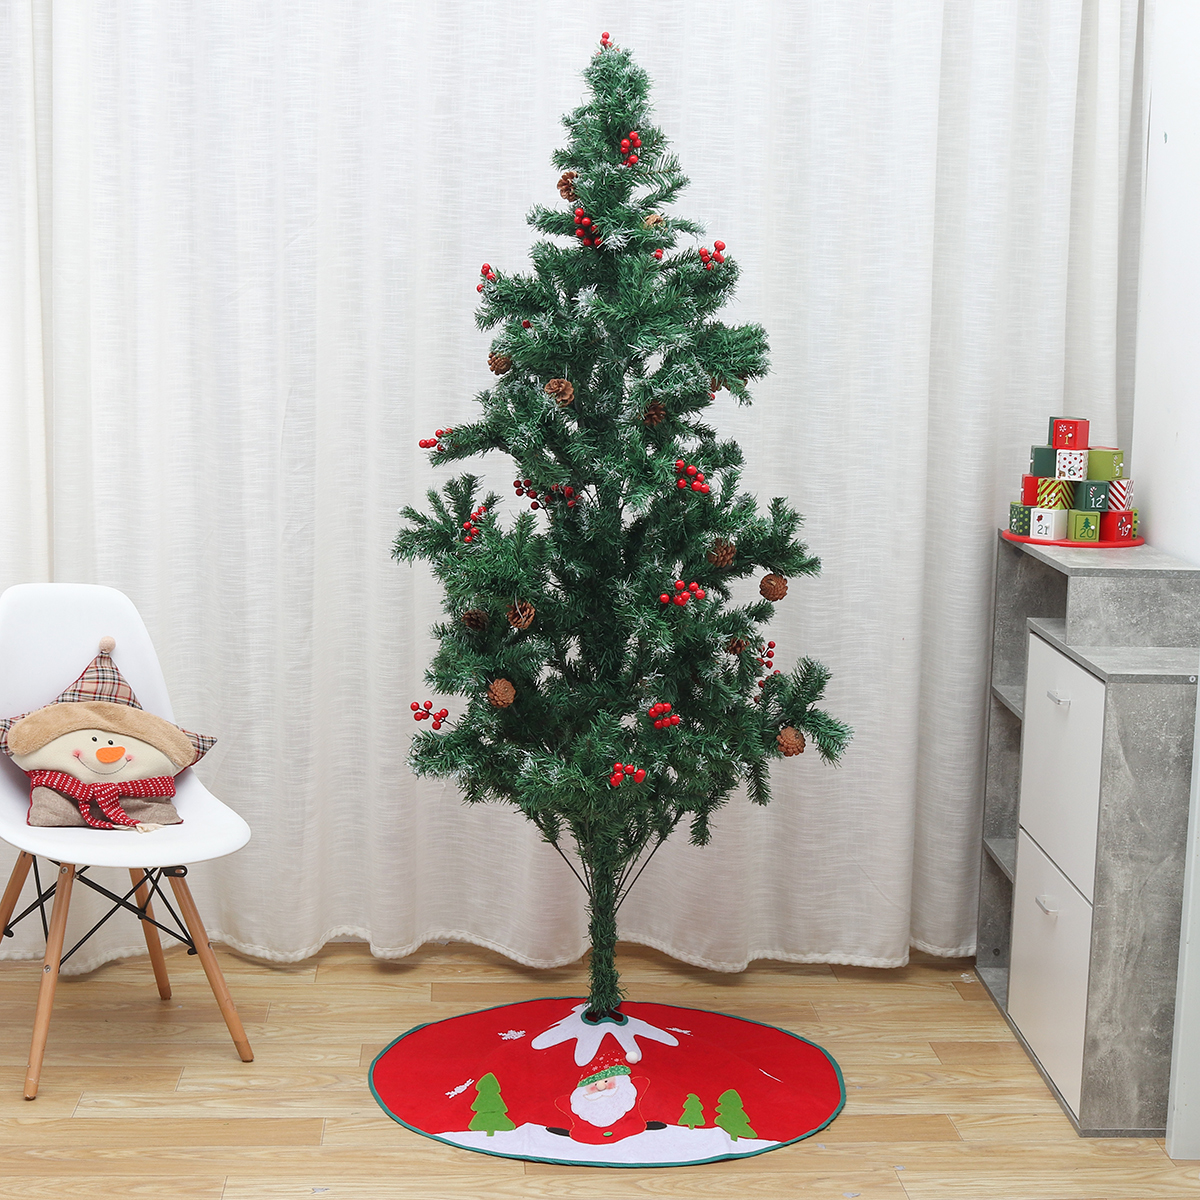 2020-Christmas-Decor-Santa-Claus-Christmas-Tree-Skirt-Aprons-New-Year-Xmas-Tree-Carpet-Foot-Cover-fo-1770951-11